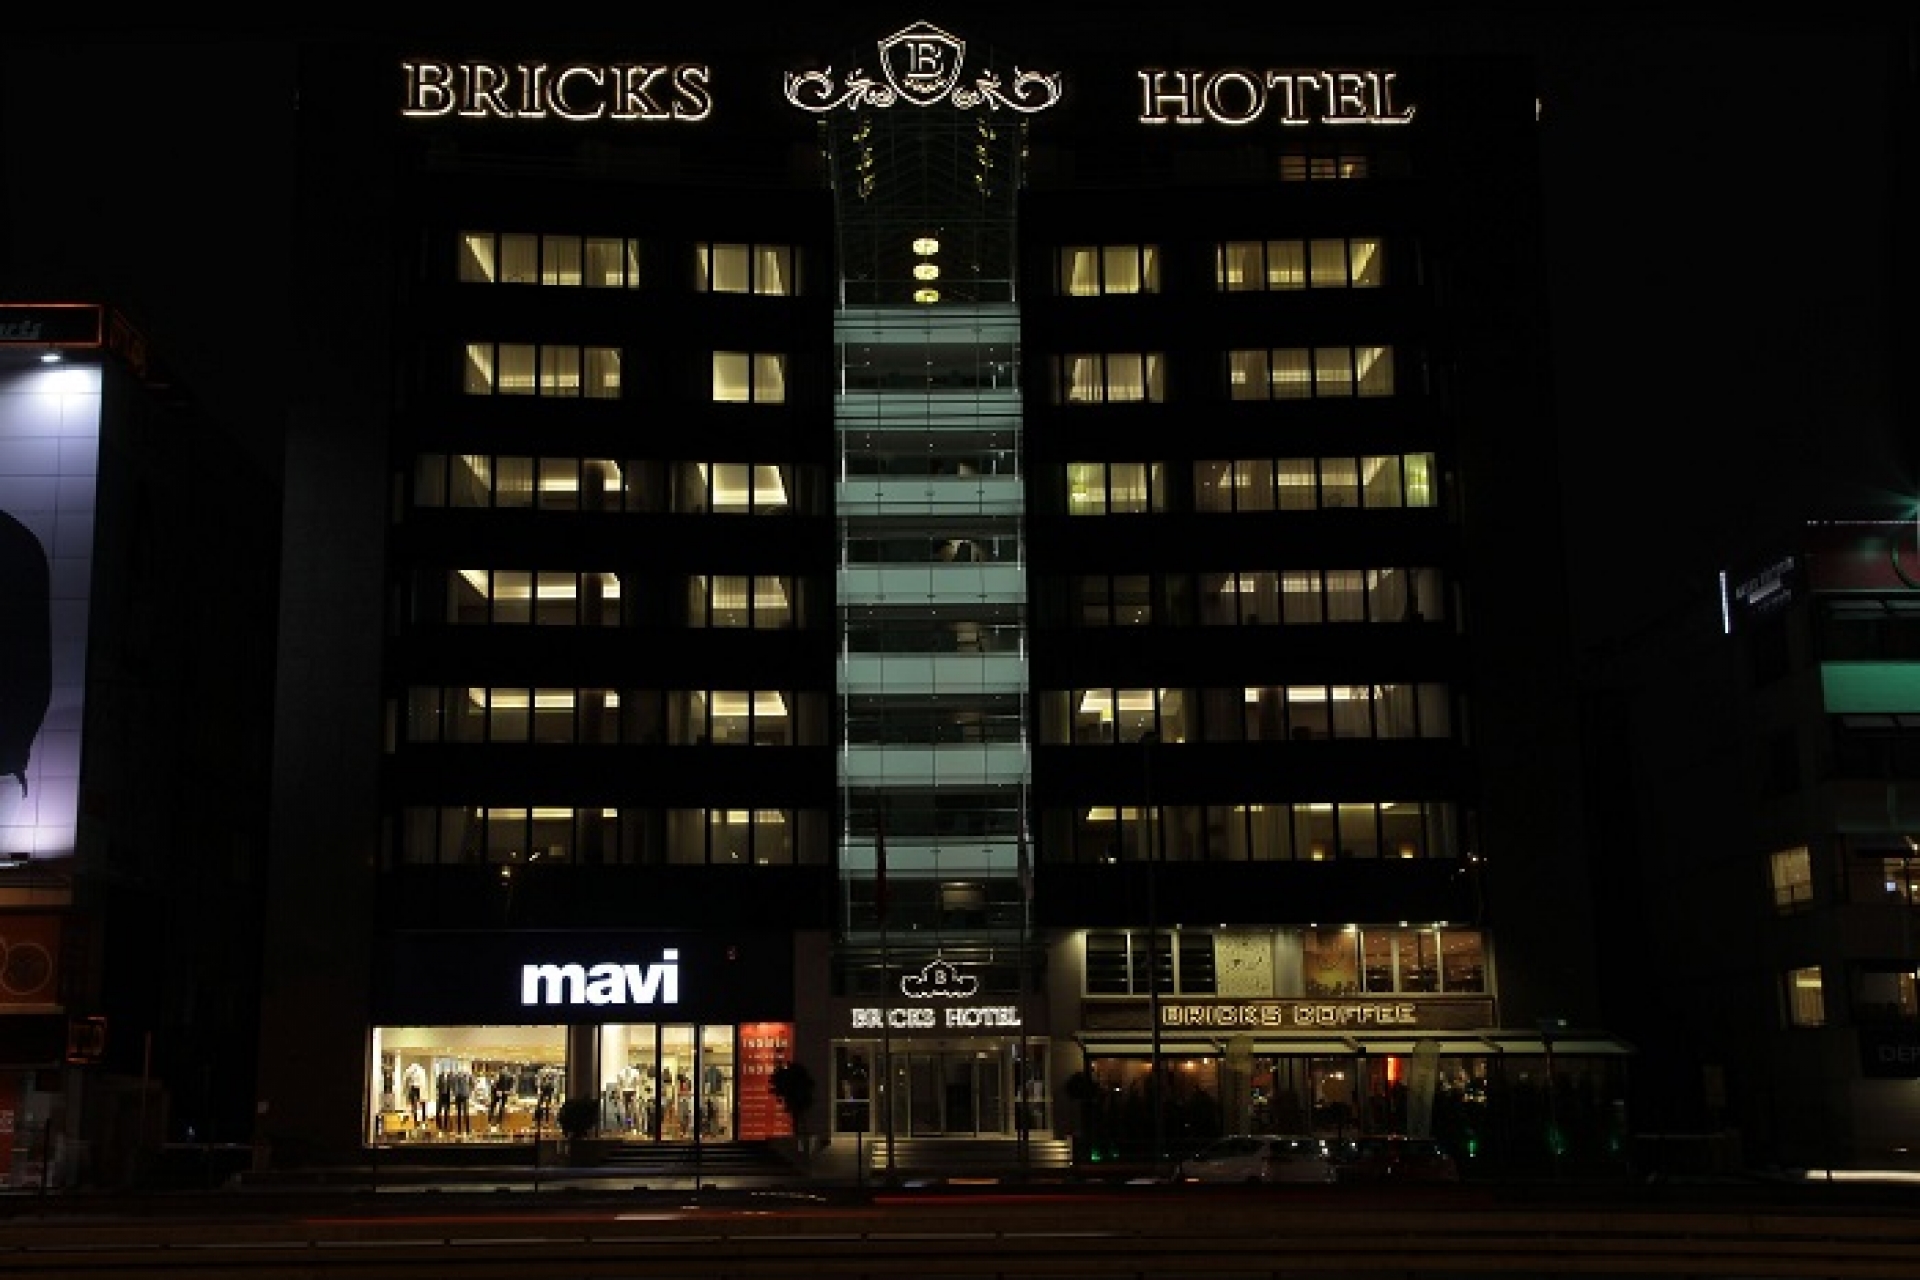 Bricks Airport Hotel